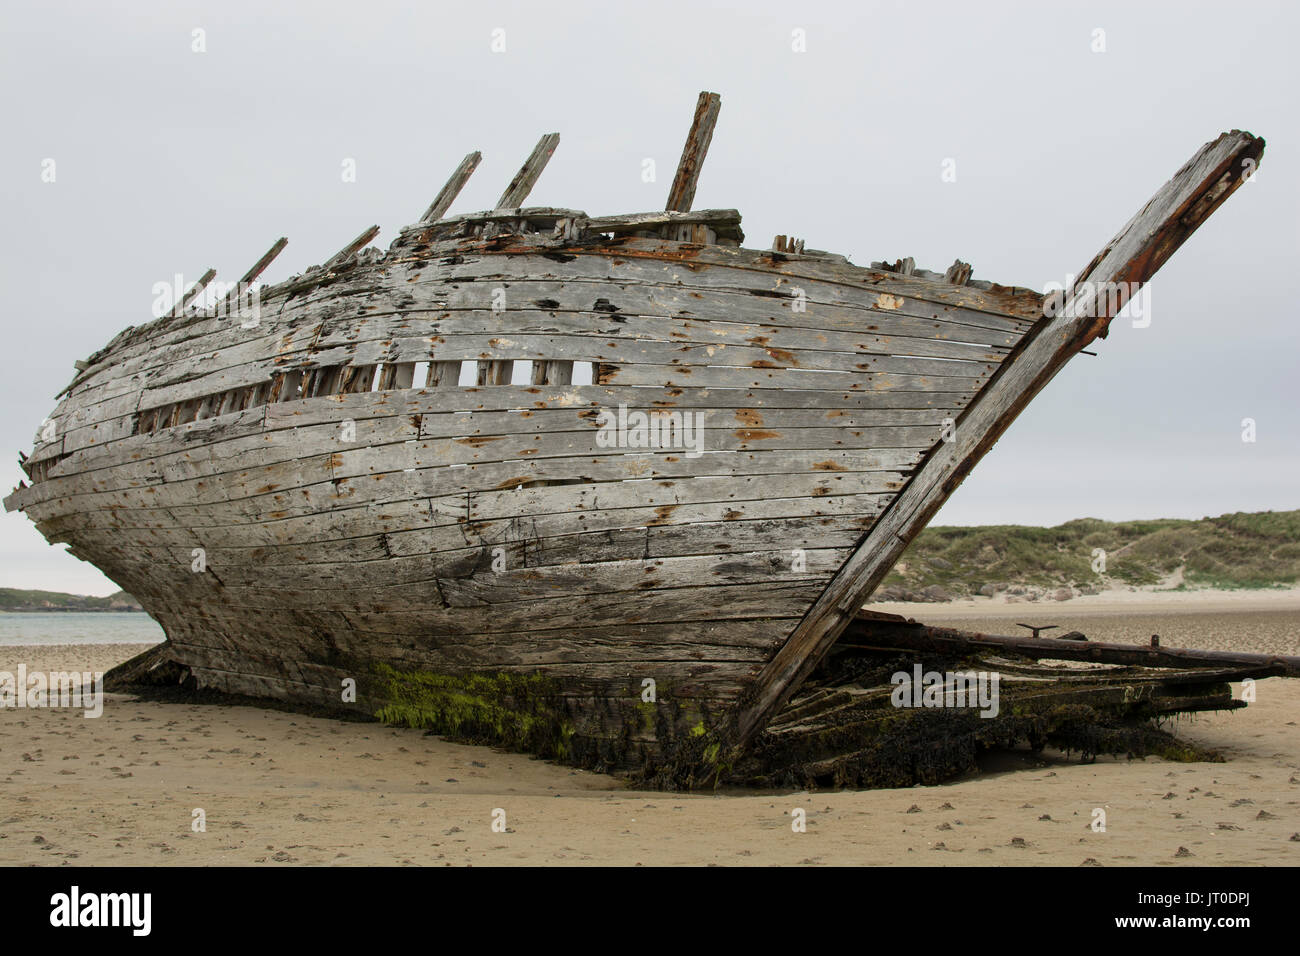 Shipwreck on a beach Stock Photo